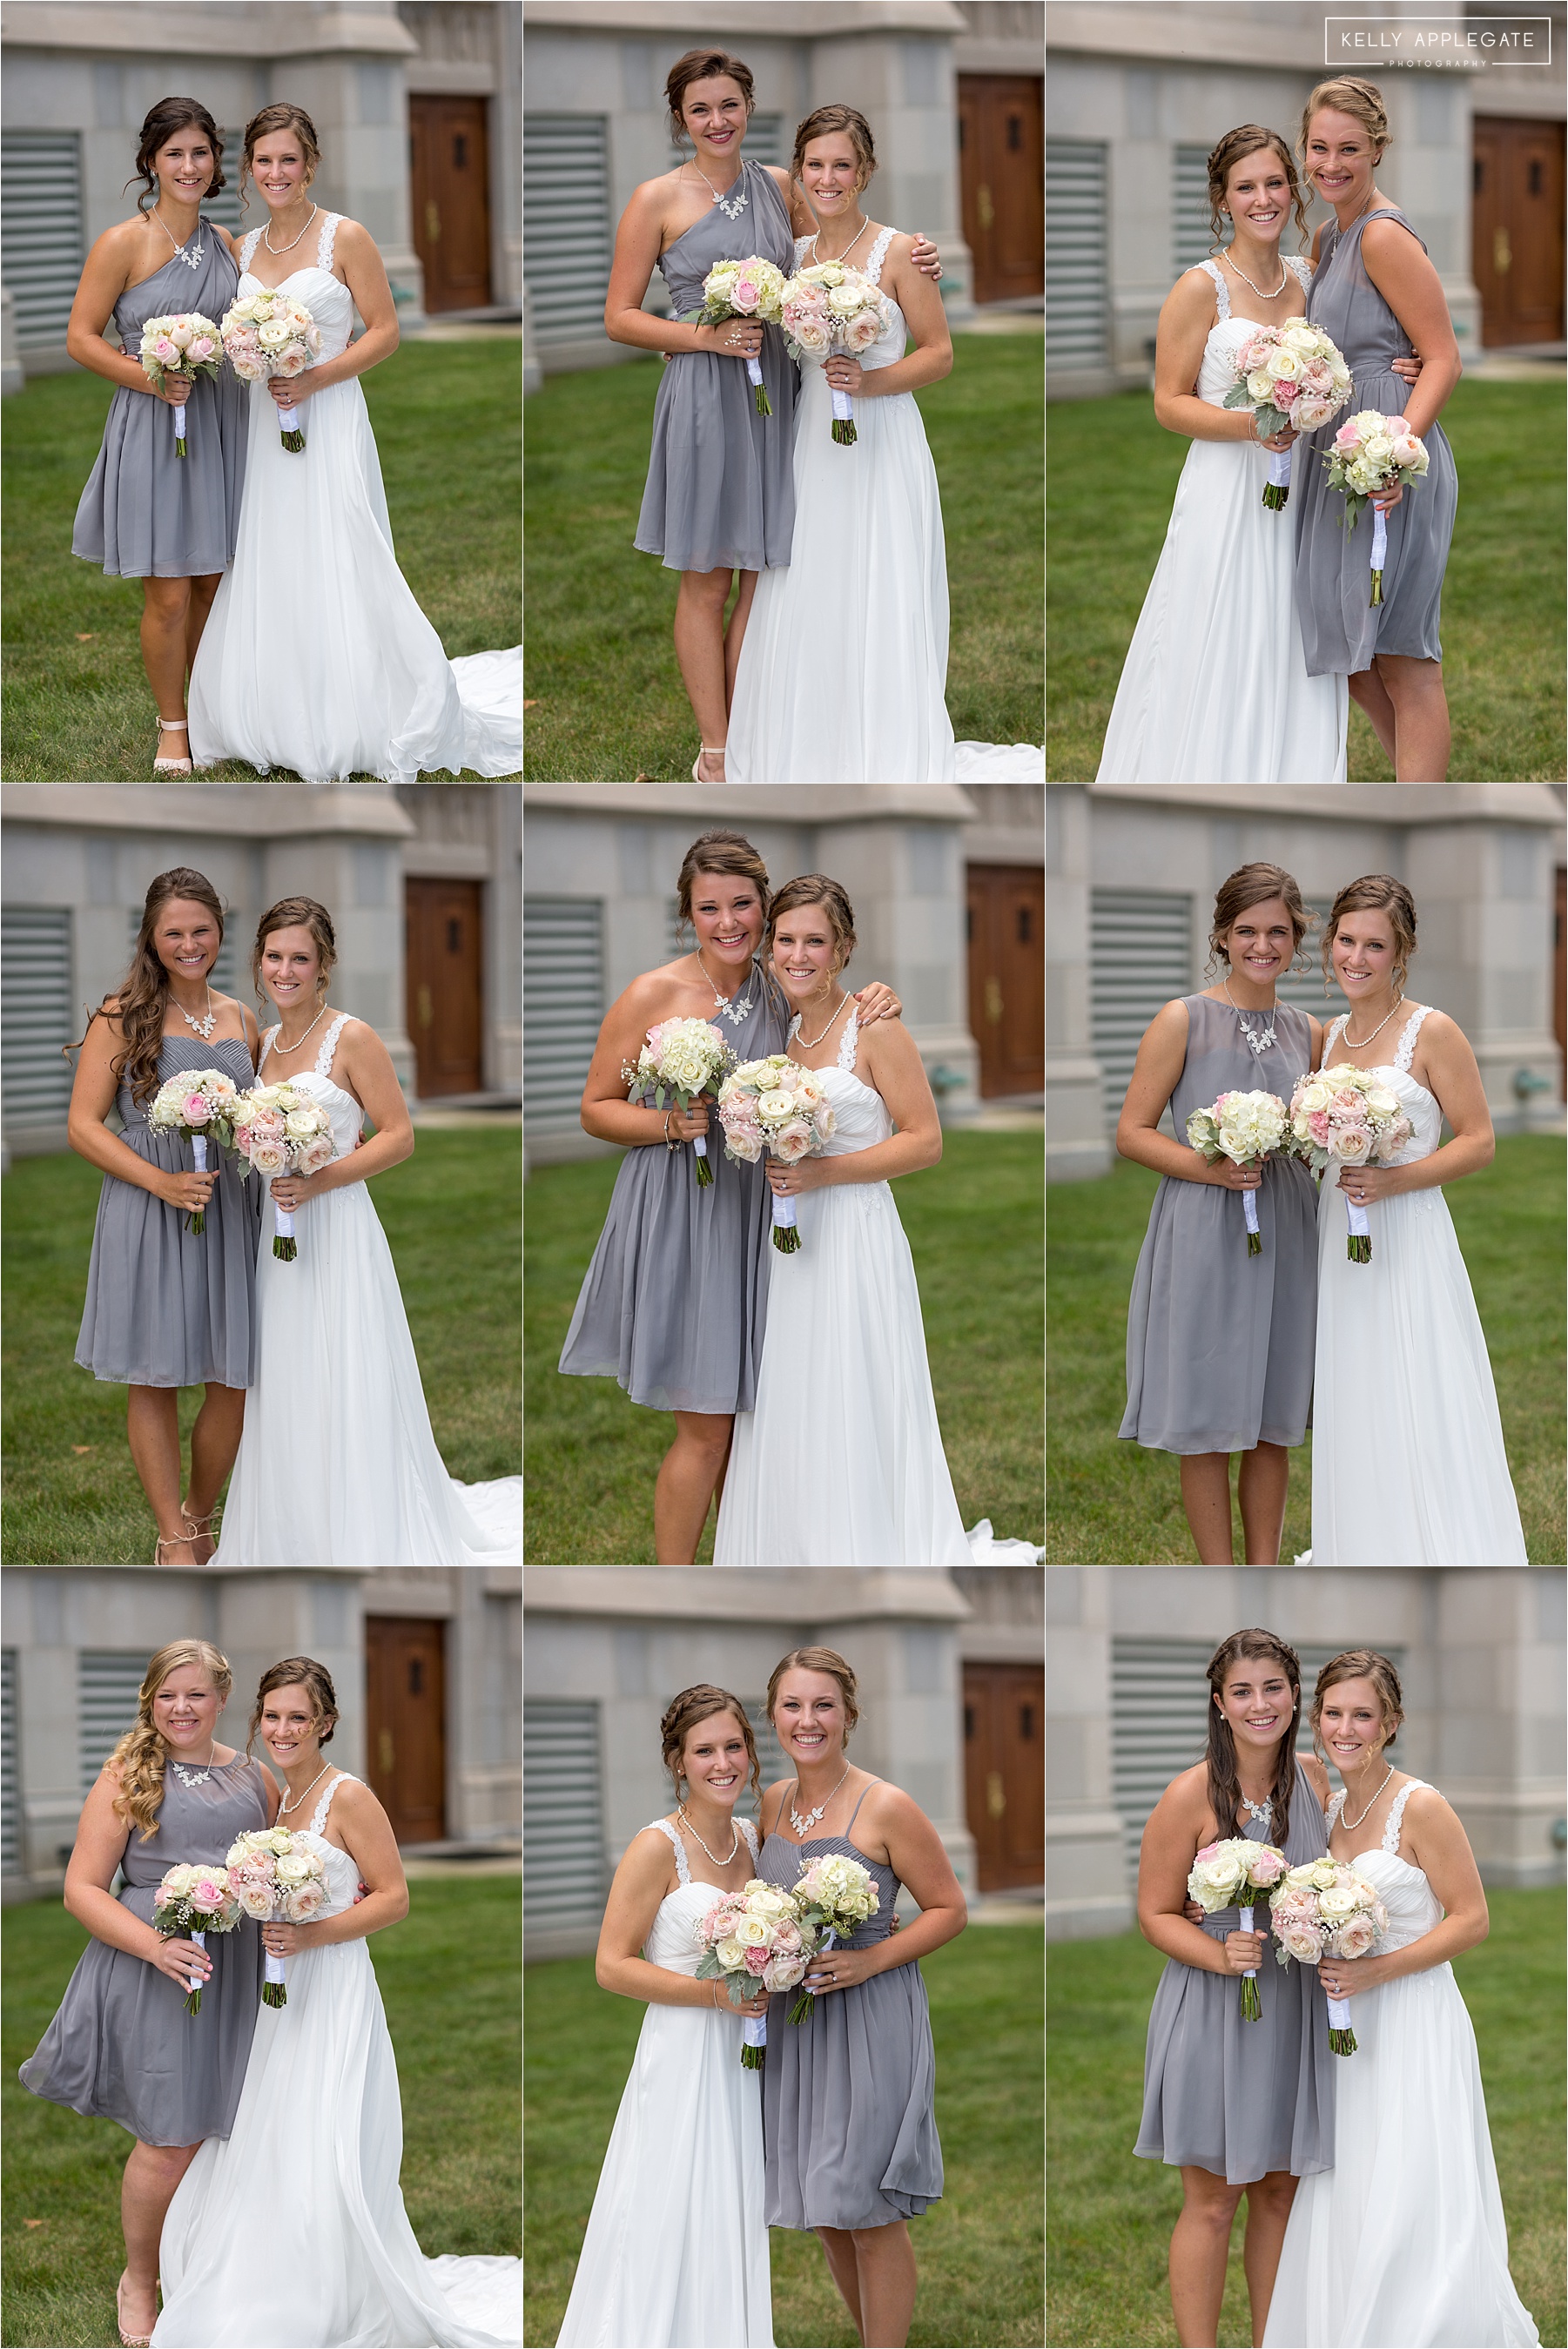 IAN & CARRIE BLOG bridesmaids-991.jpg